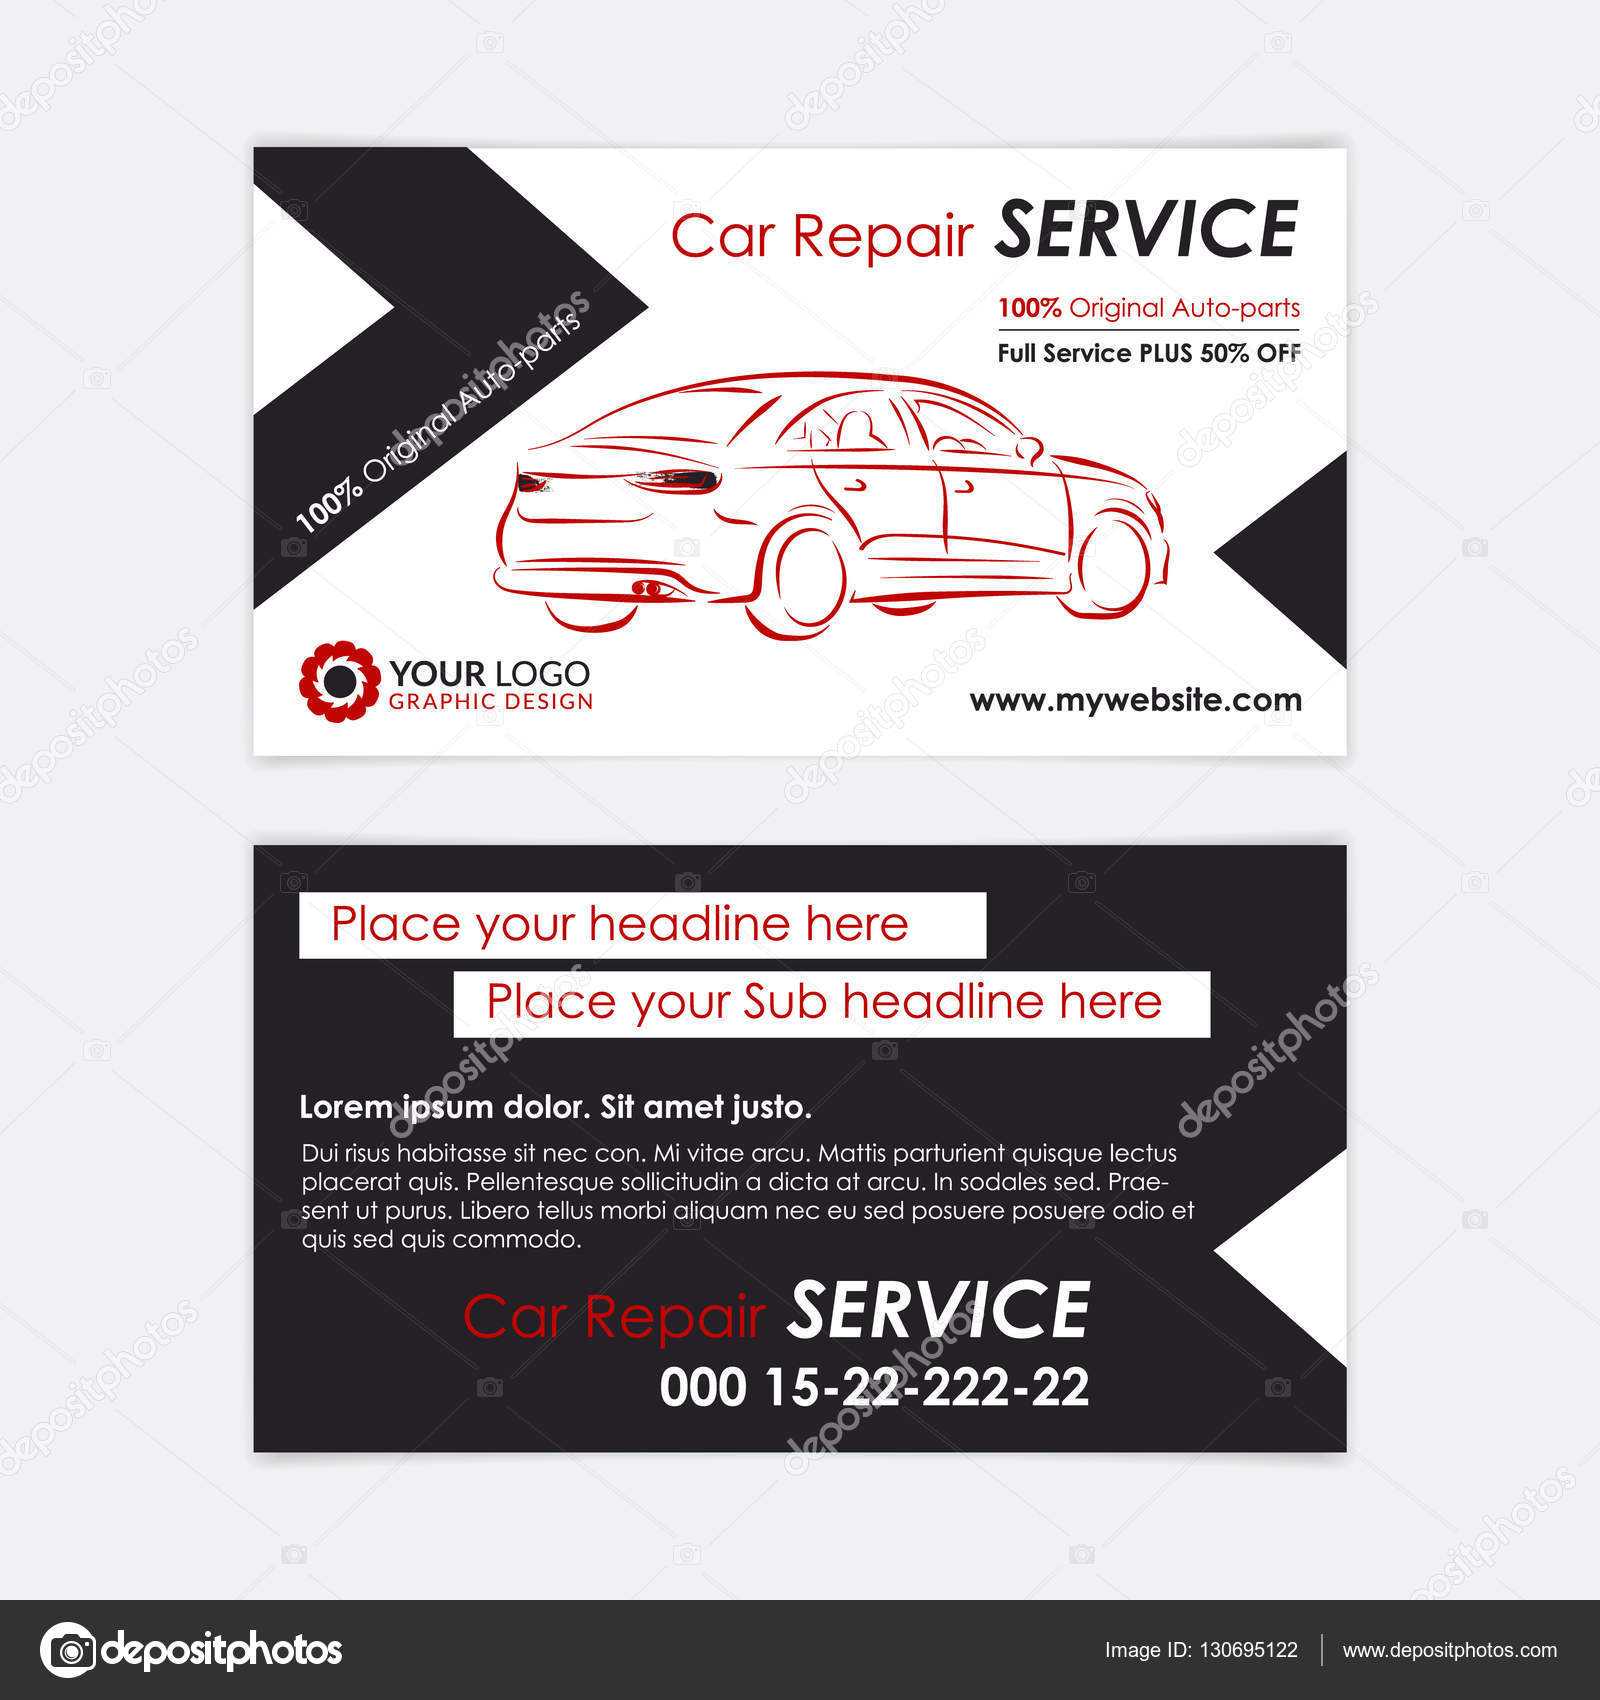 Automotive Business Card Templates | Auto Repair Business Inside Automotive Business Card Templates